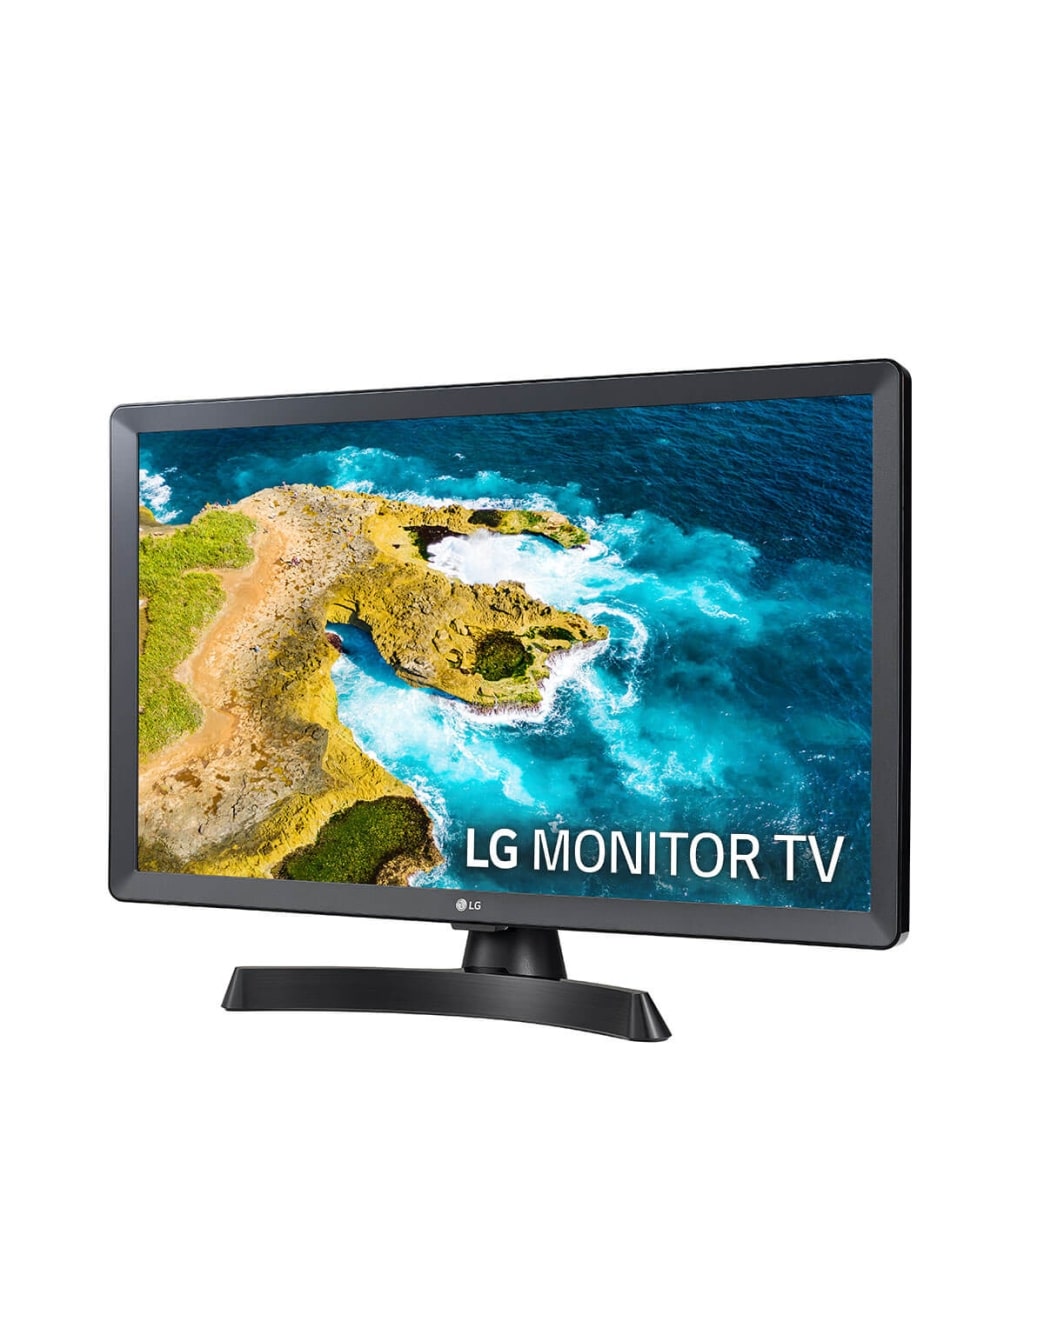 TELEVISOR SMART TV LG 24TN510S-PZ COLOR NEGRO PANTALLA LED 24 PULGADAS  BLUETOOTH WIFI HD READY